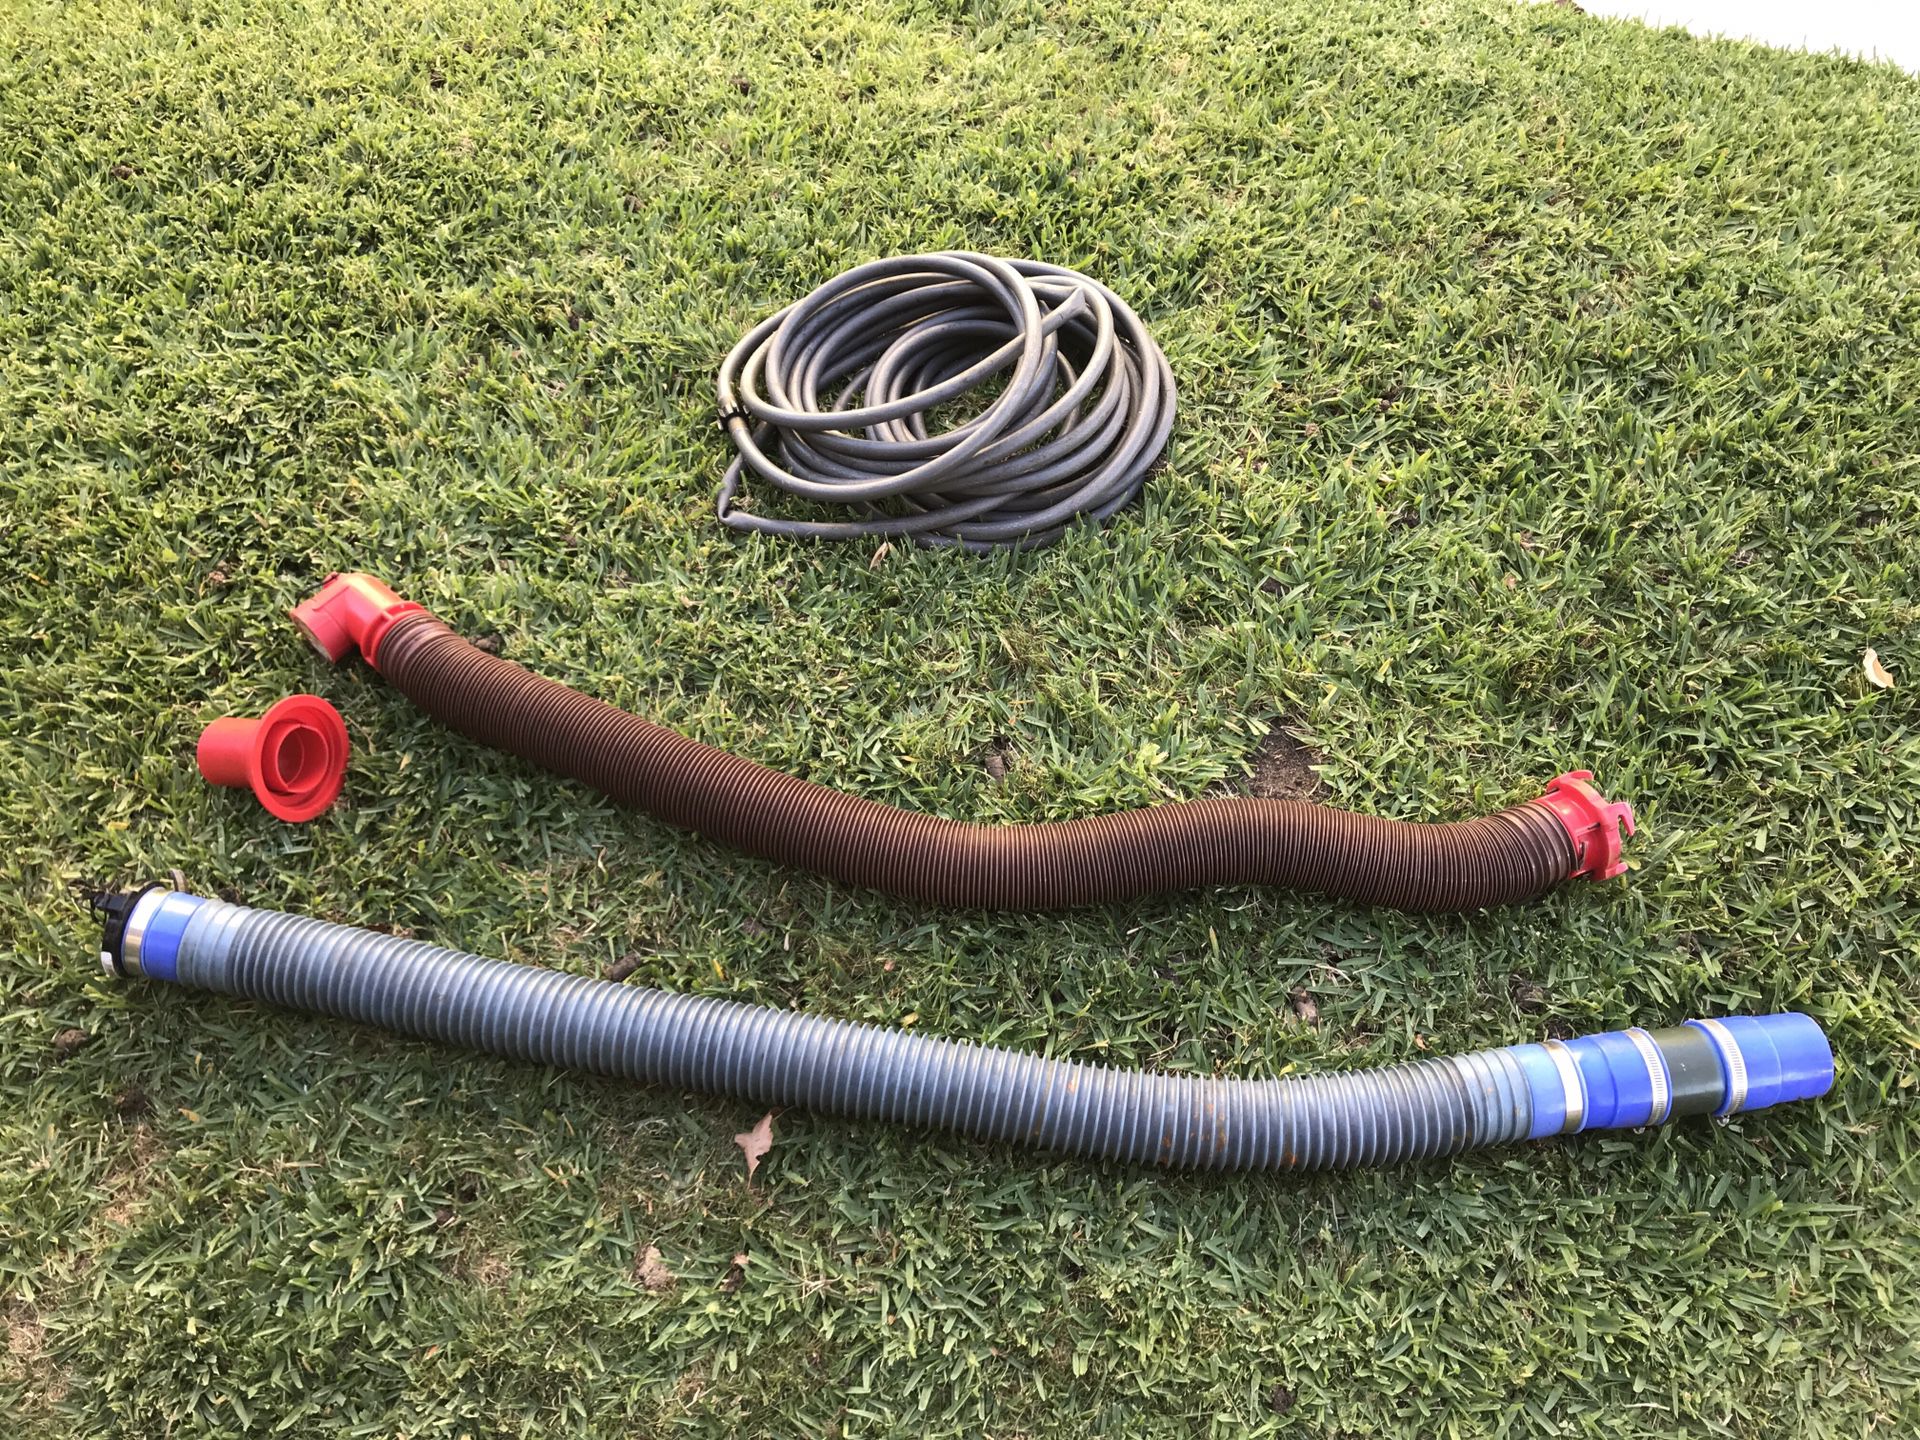 RV sewer hoses